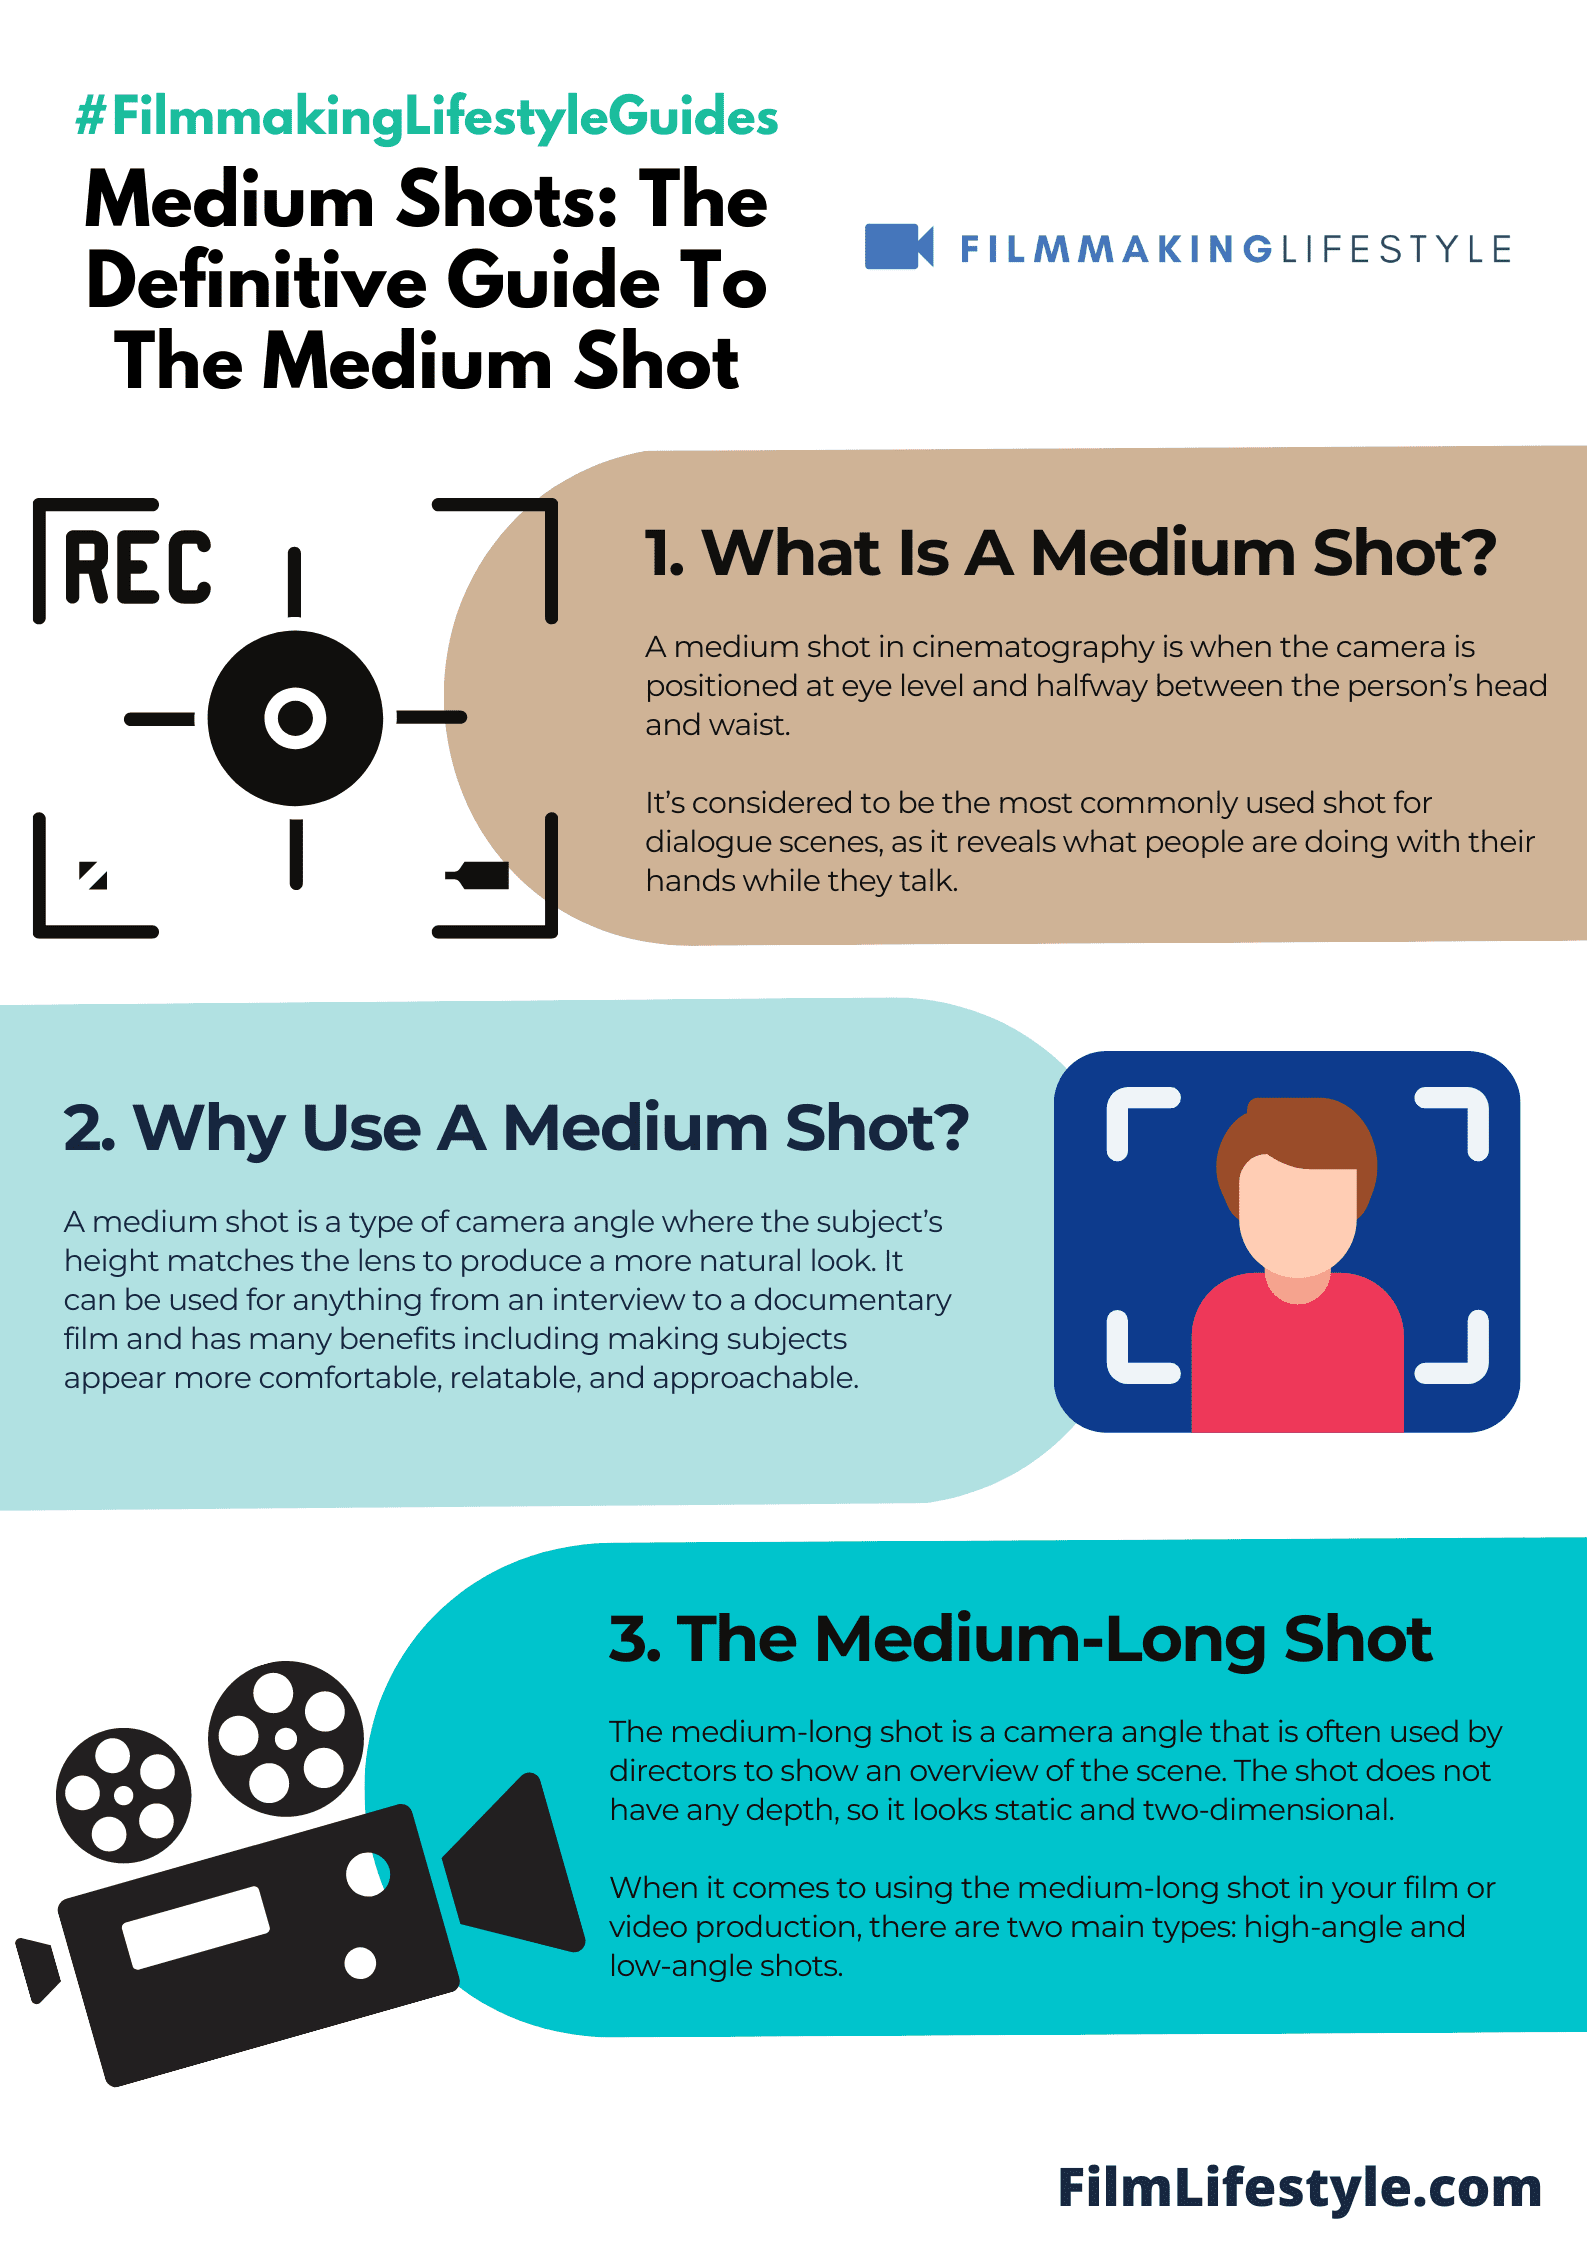 Medium Shots